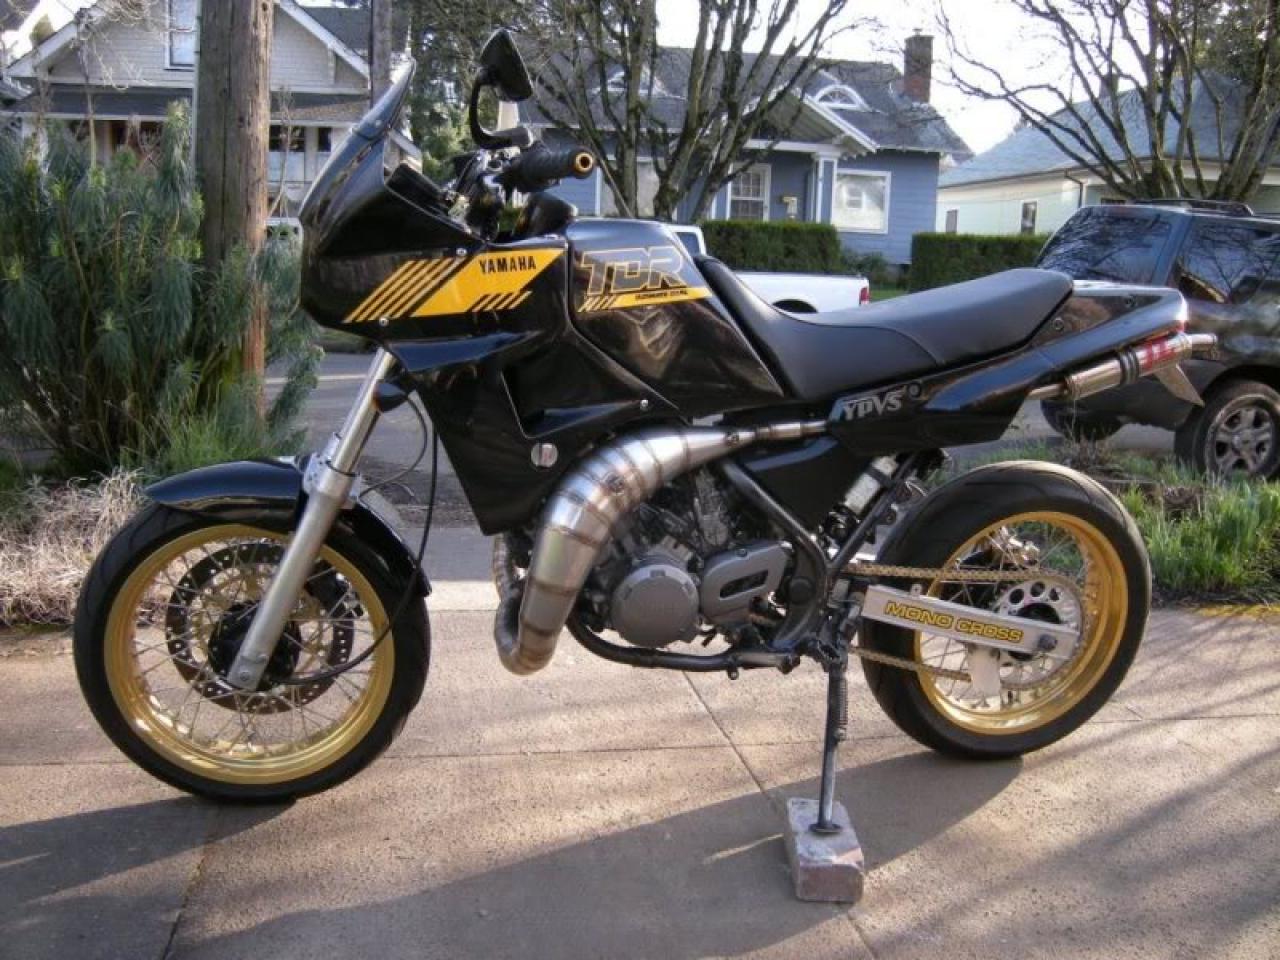 Yamaha TDR 250 1989 photo - 5